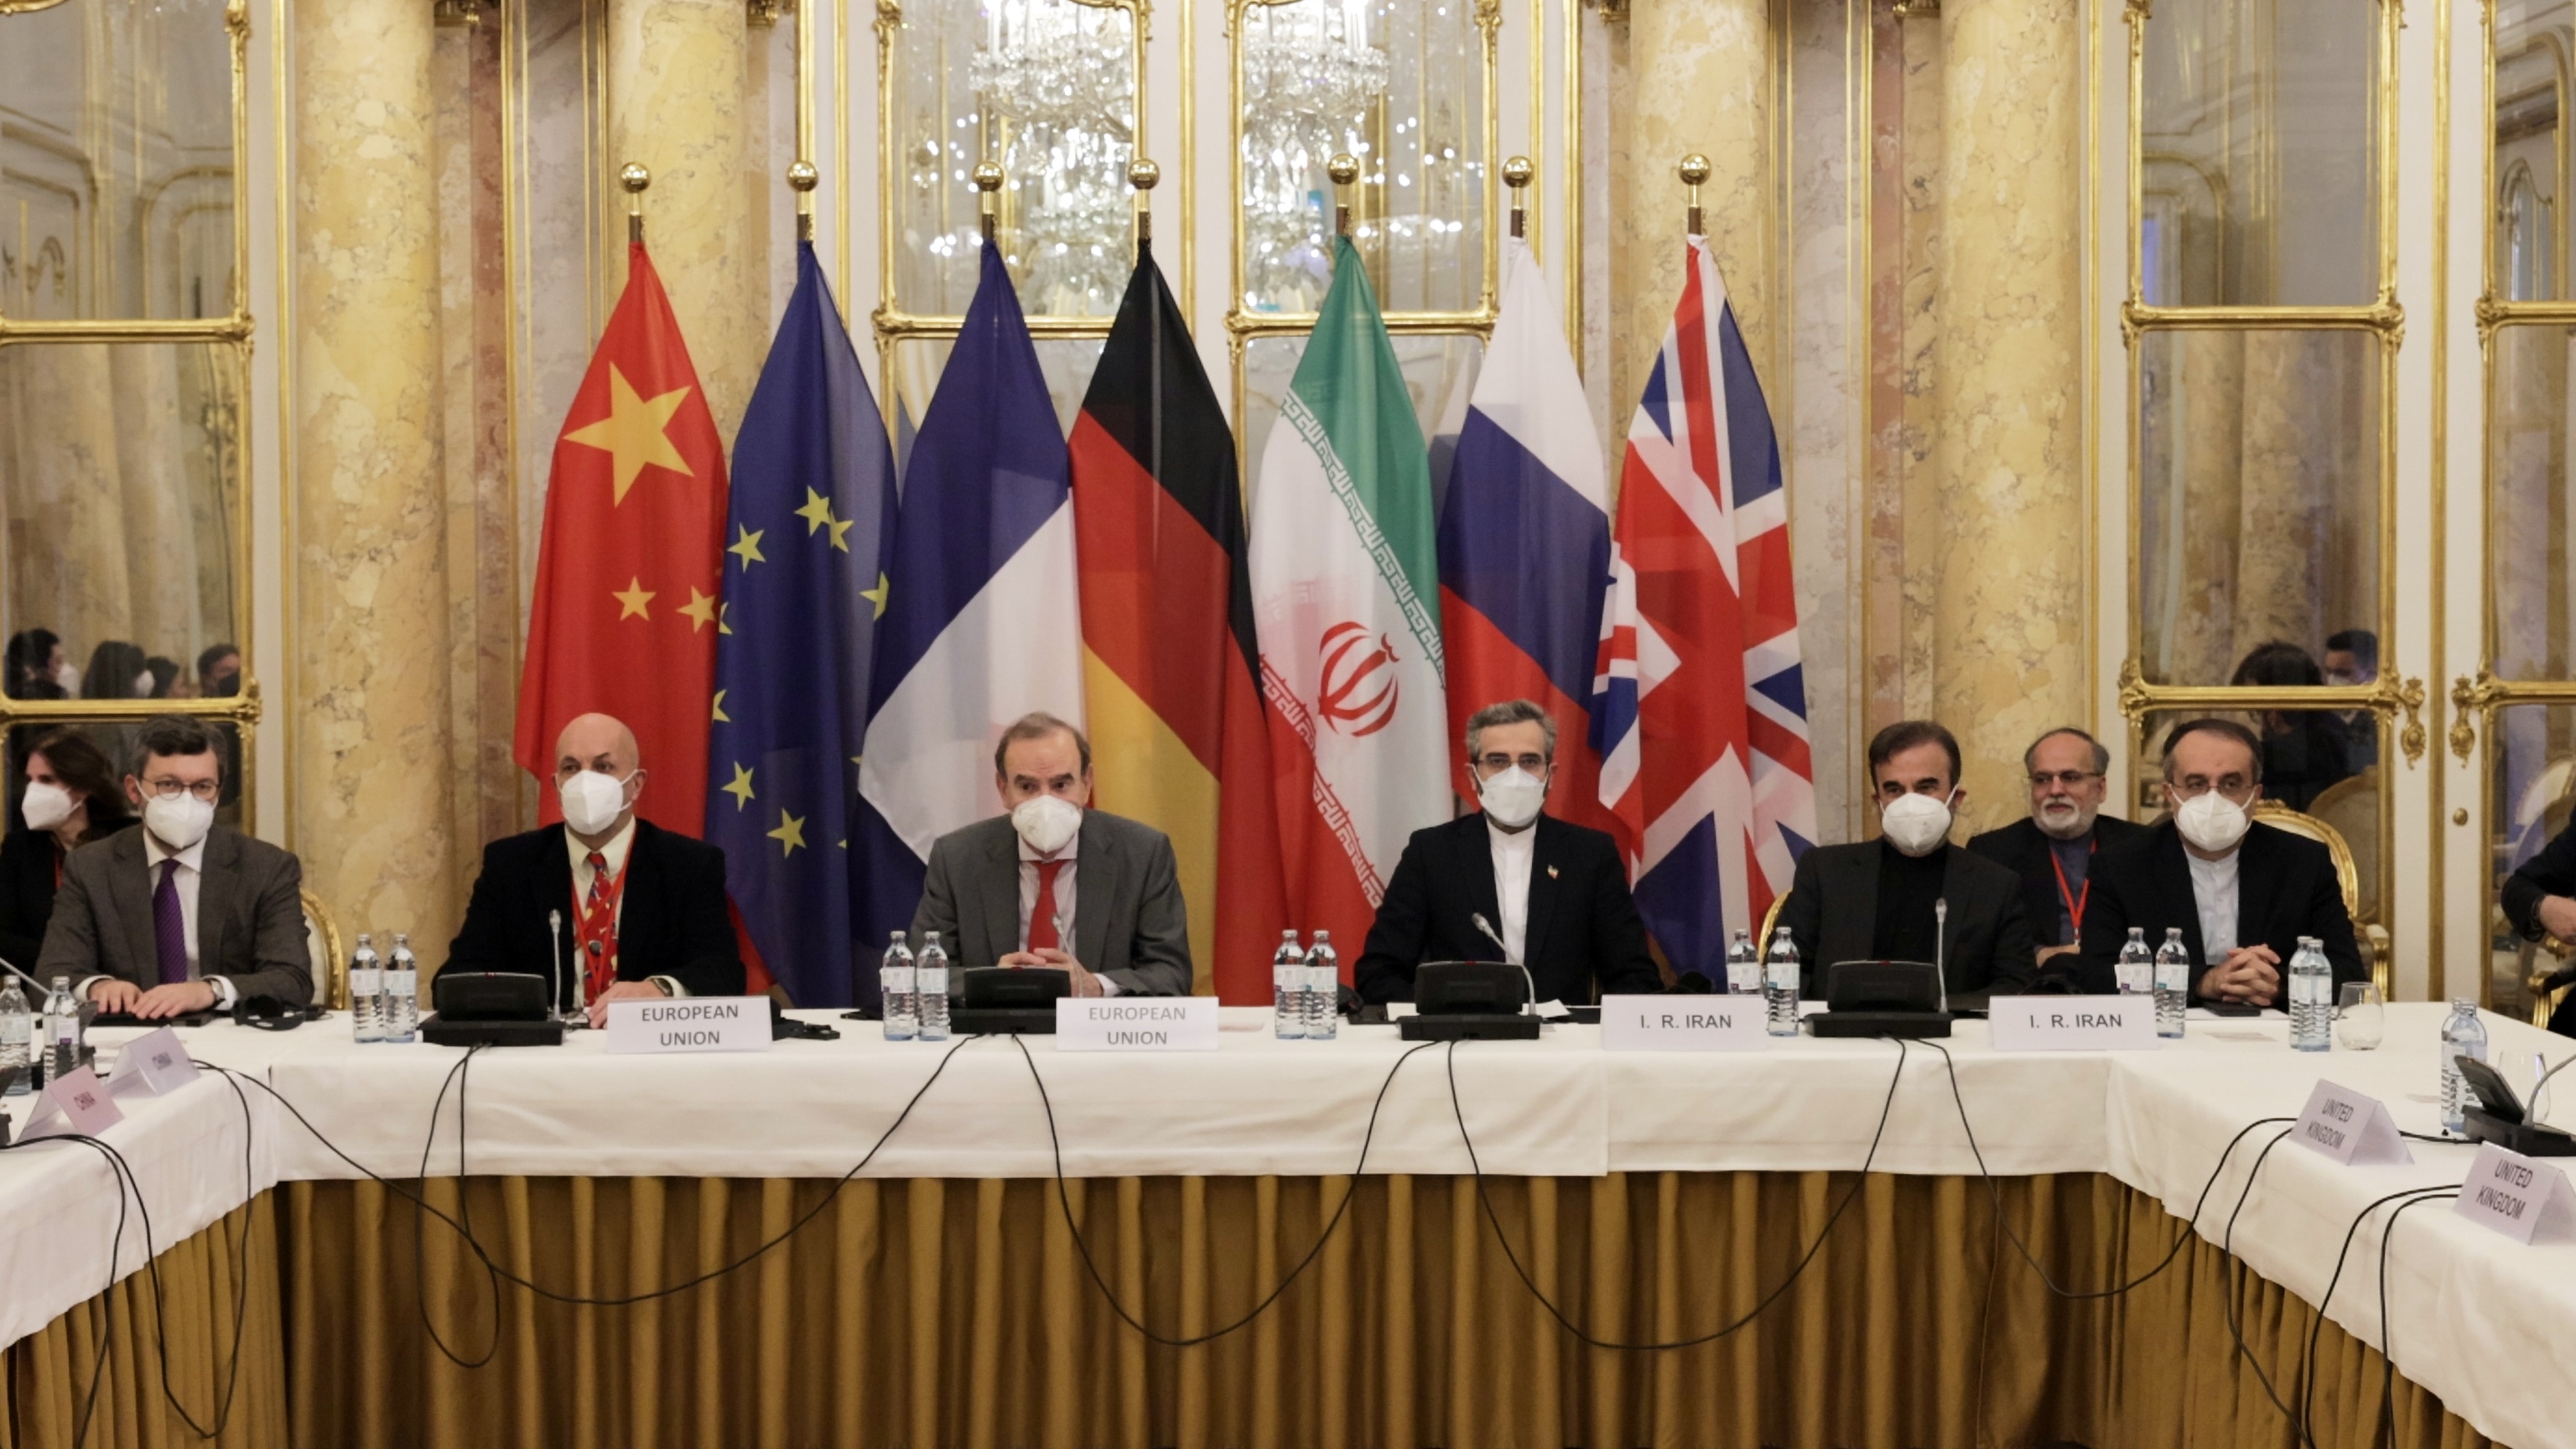 Delegates at the nuclear talks in Vienna, Austria